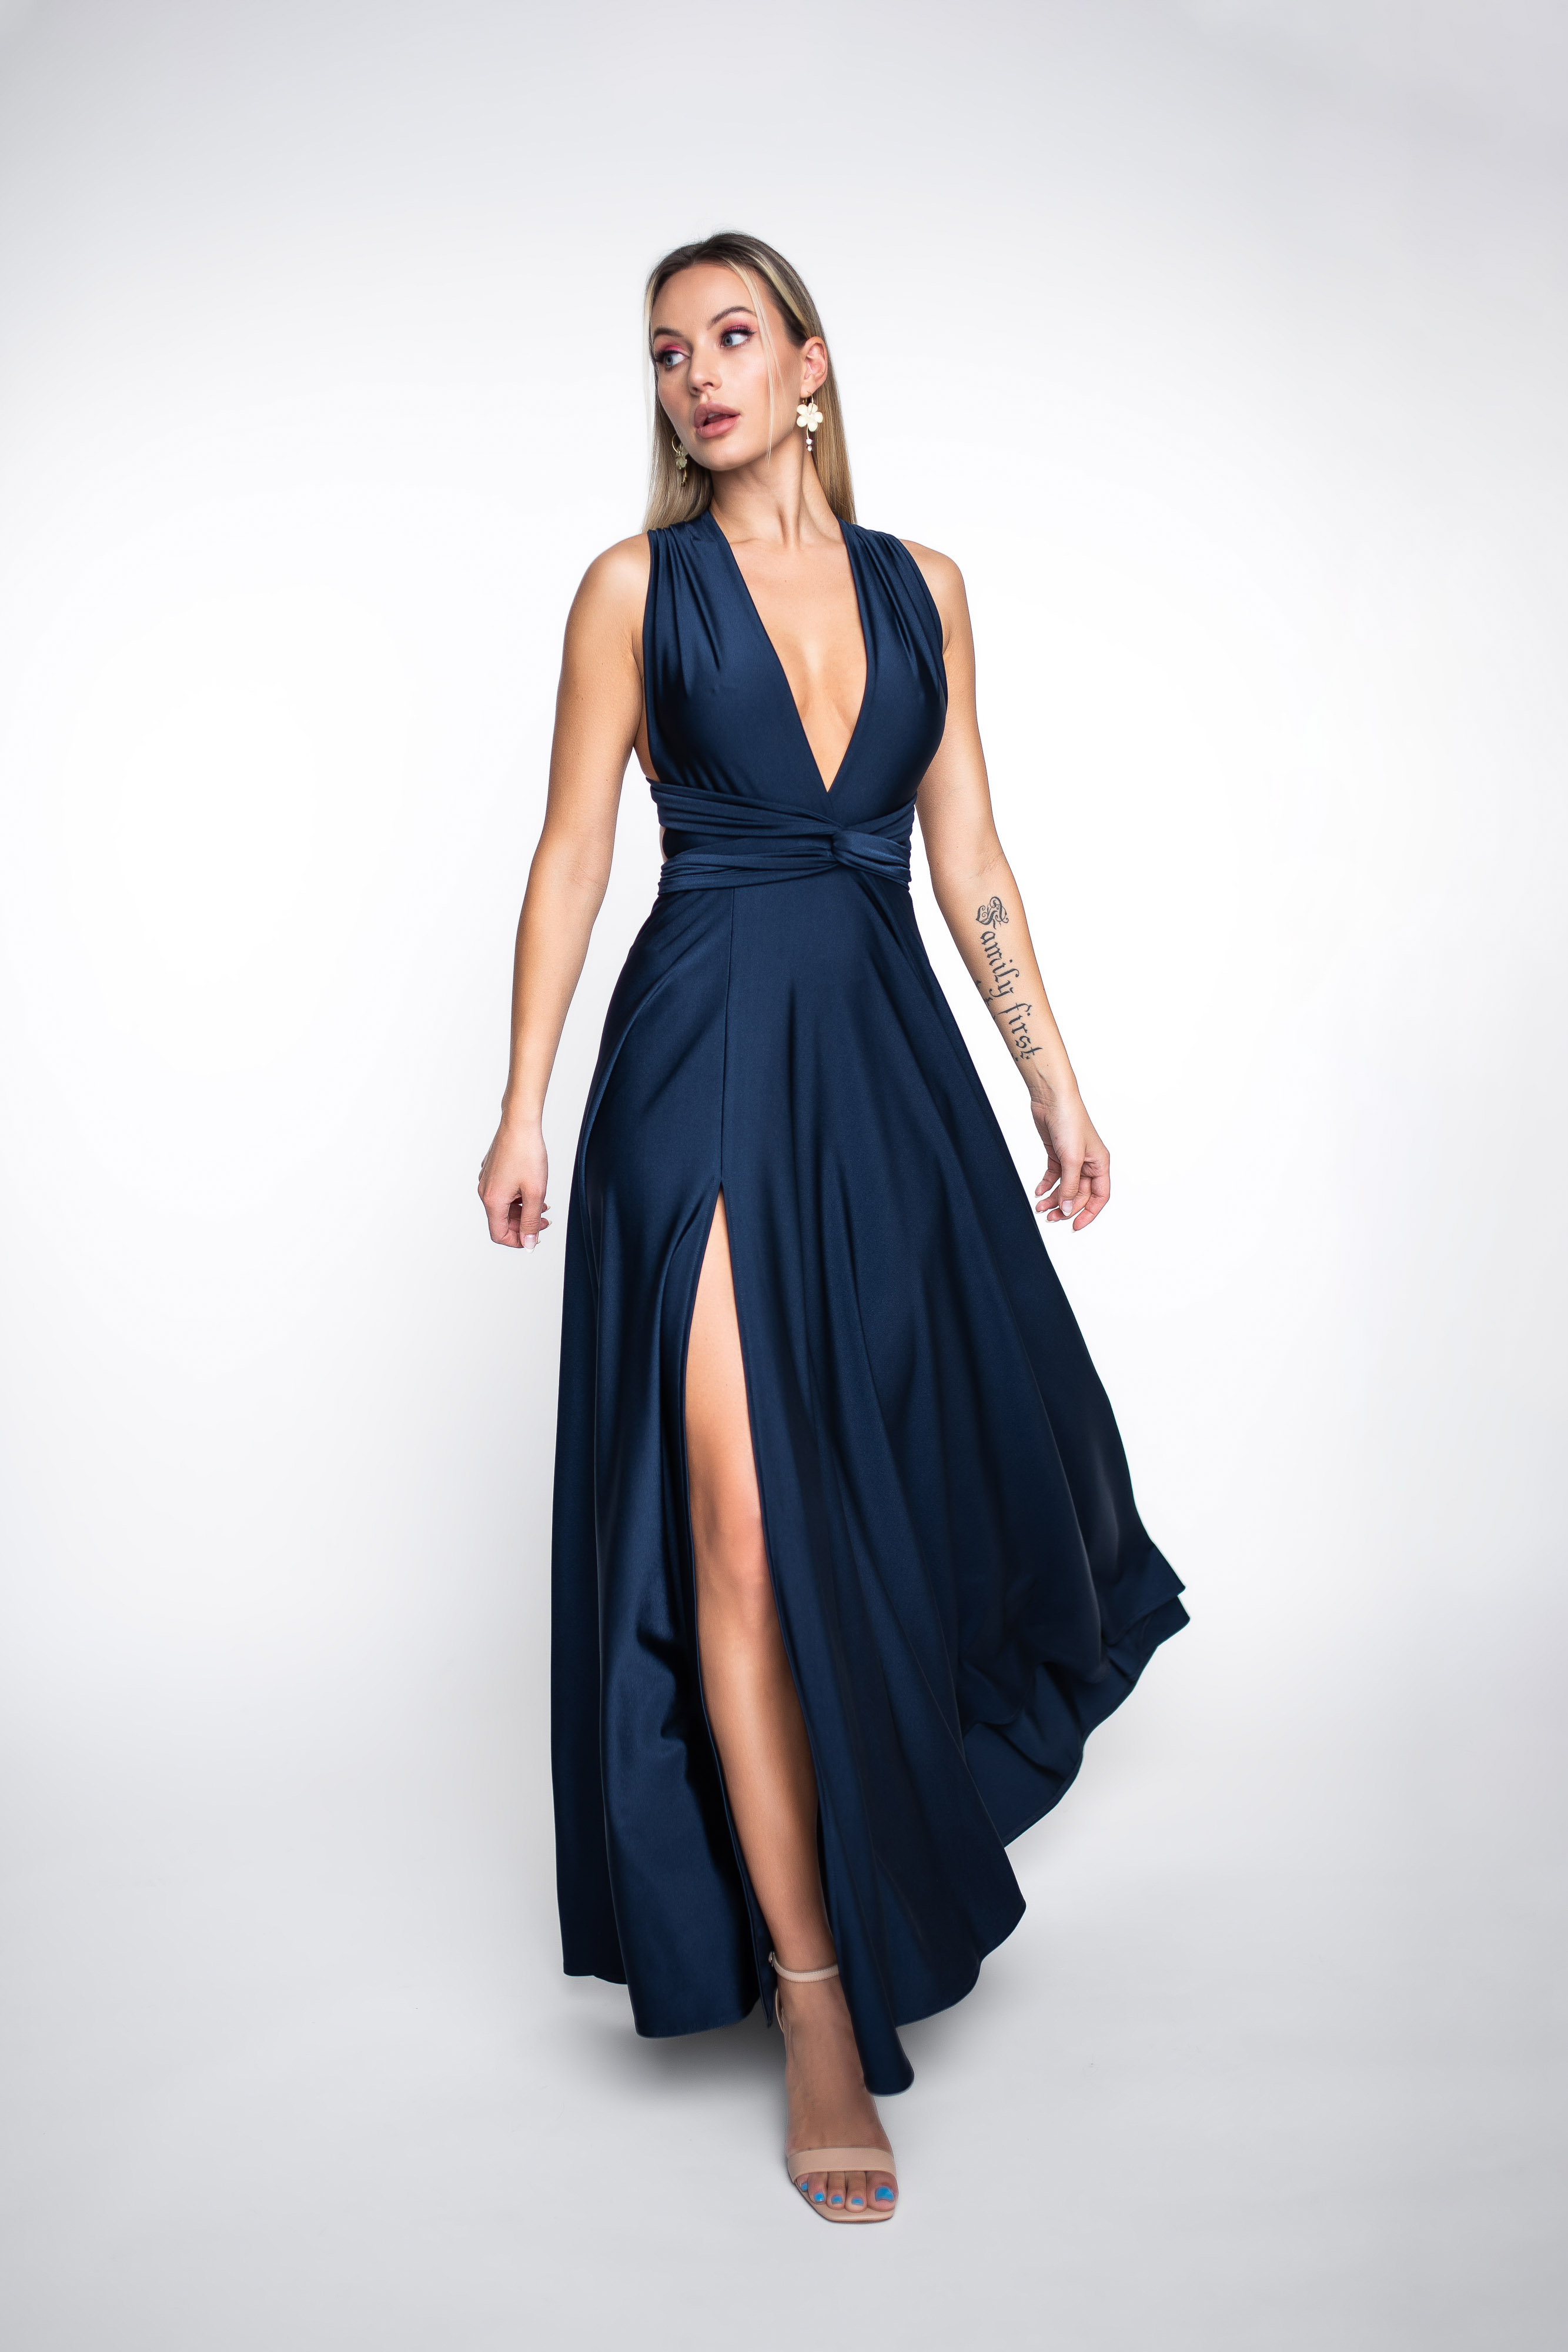 Navy Dresses | Navy Blue & Dark Blue Dresses | Shop at ASOS